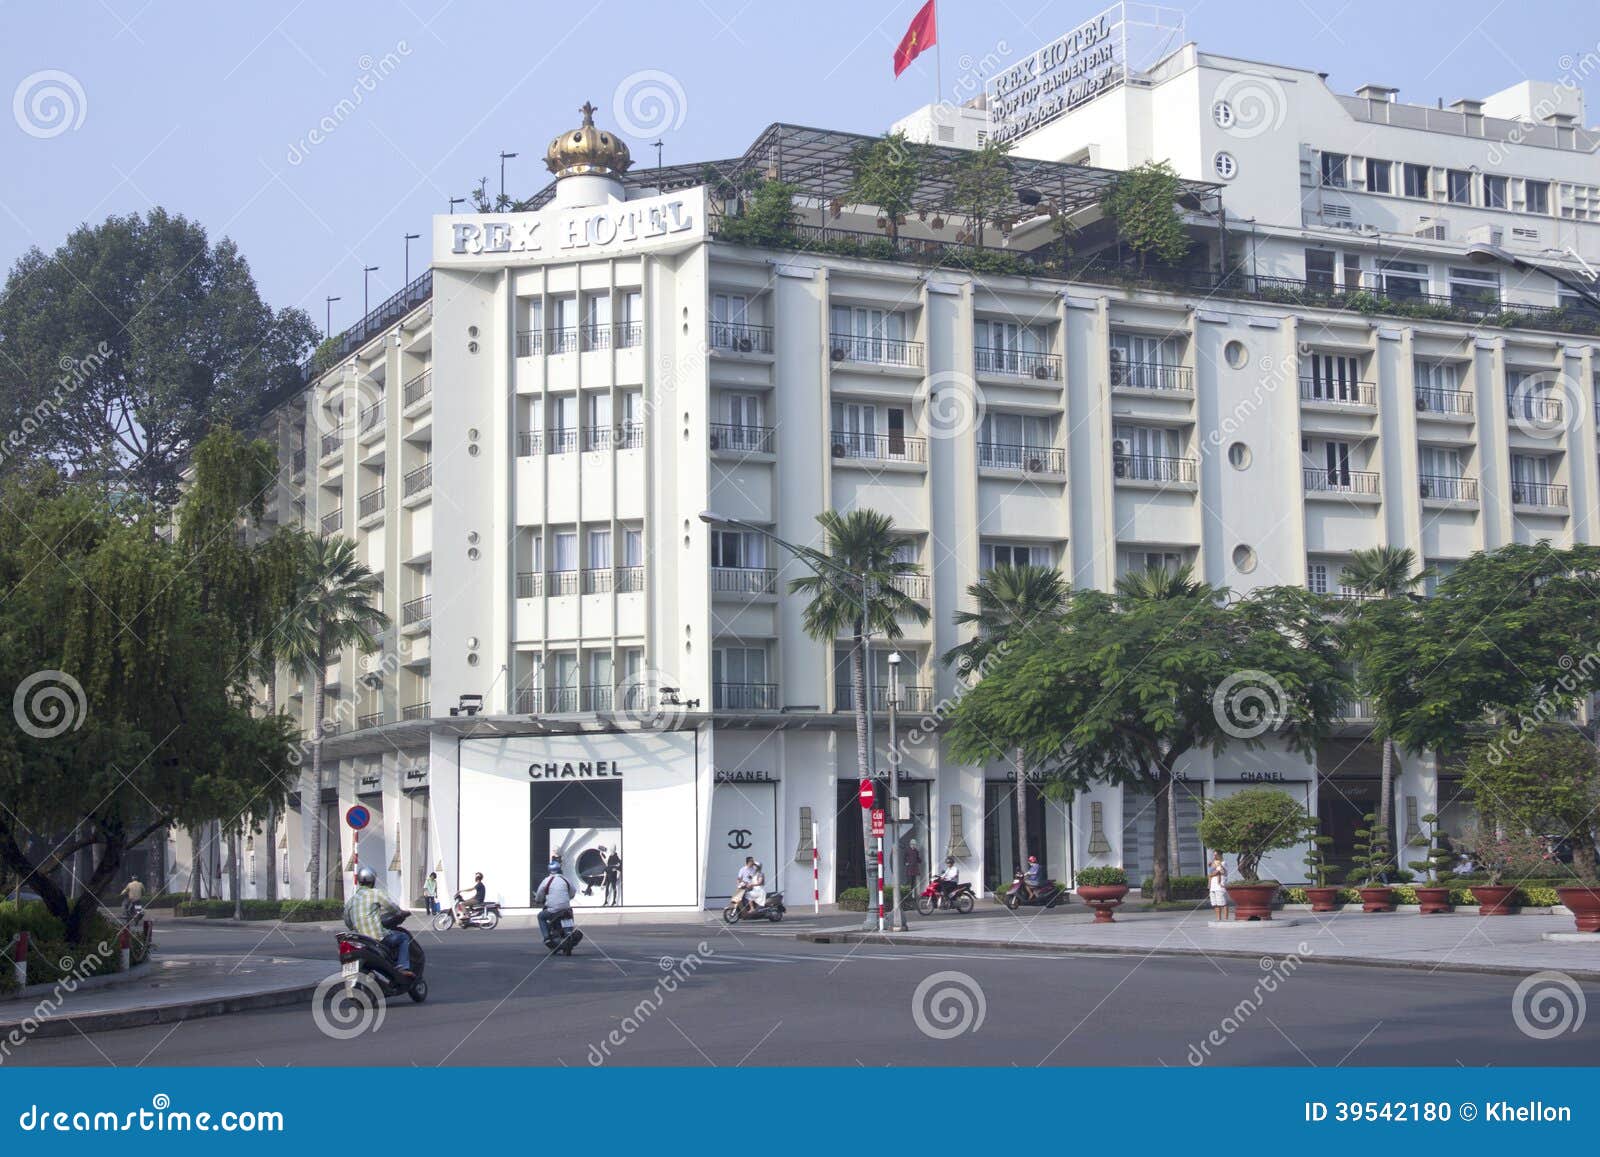 The Rex Hotel Editorial Image. Image Of Saigon, Hotel - 39542180